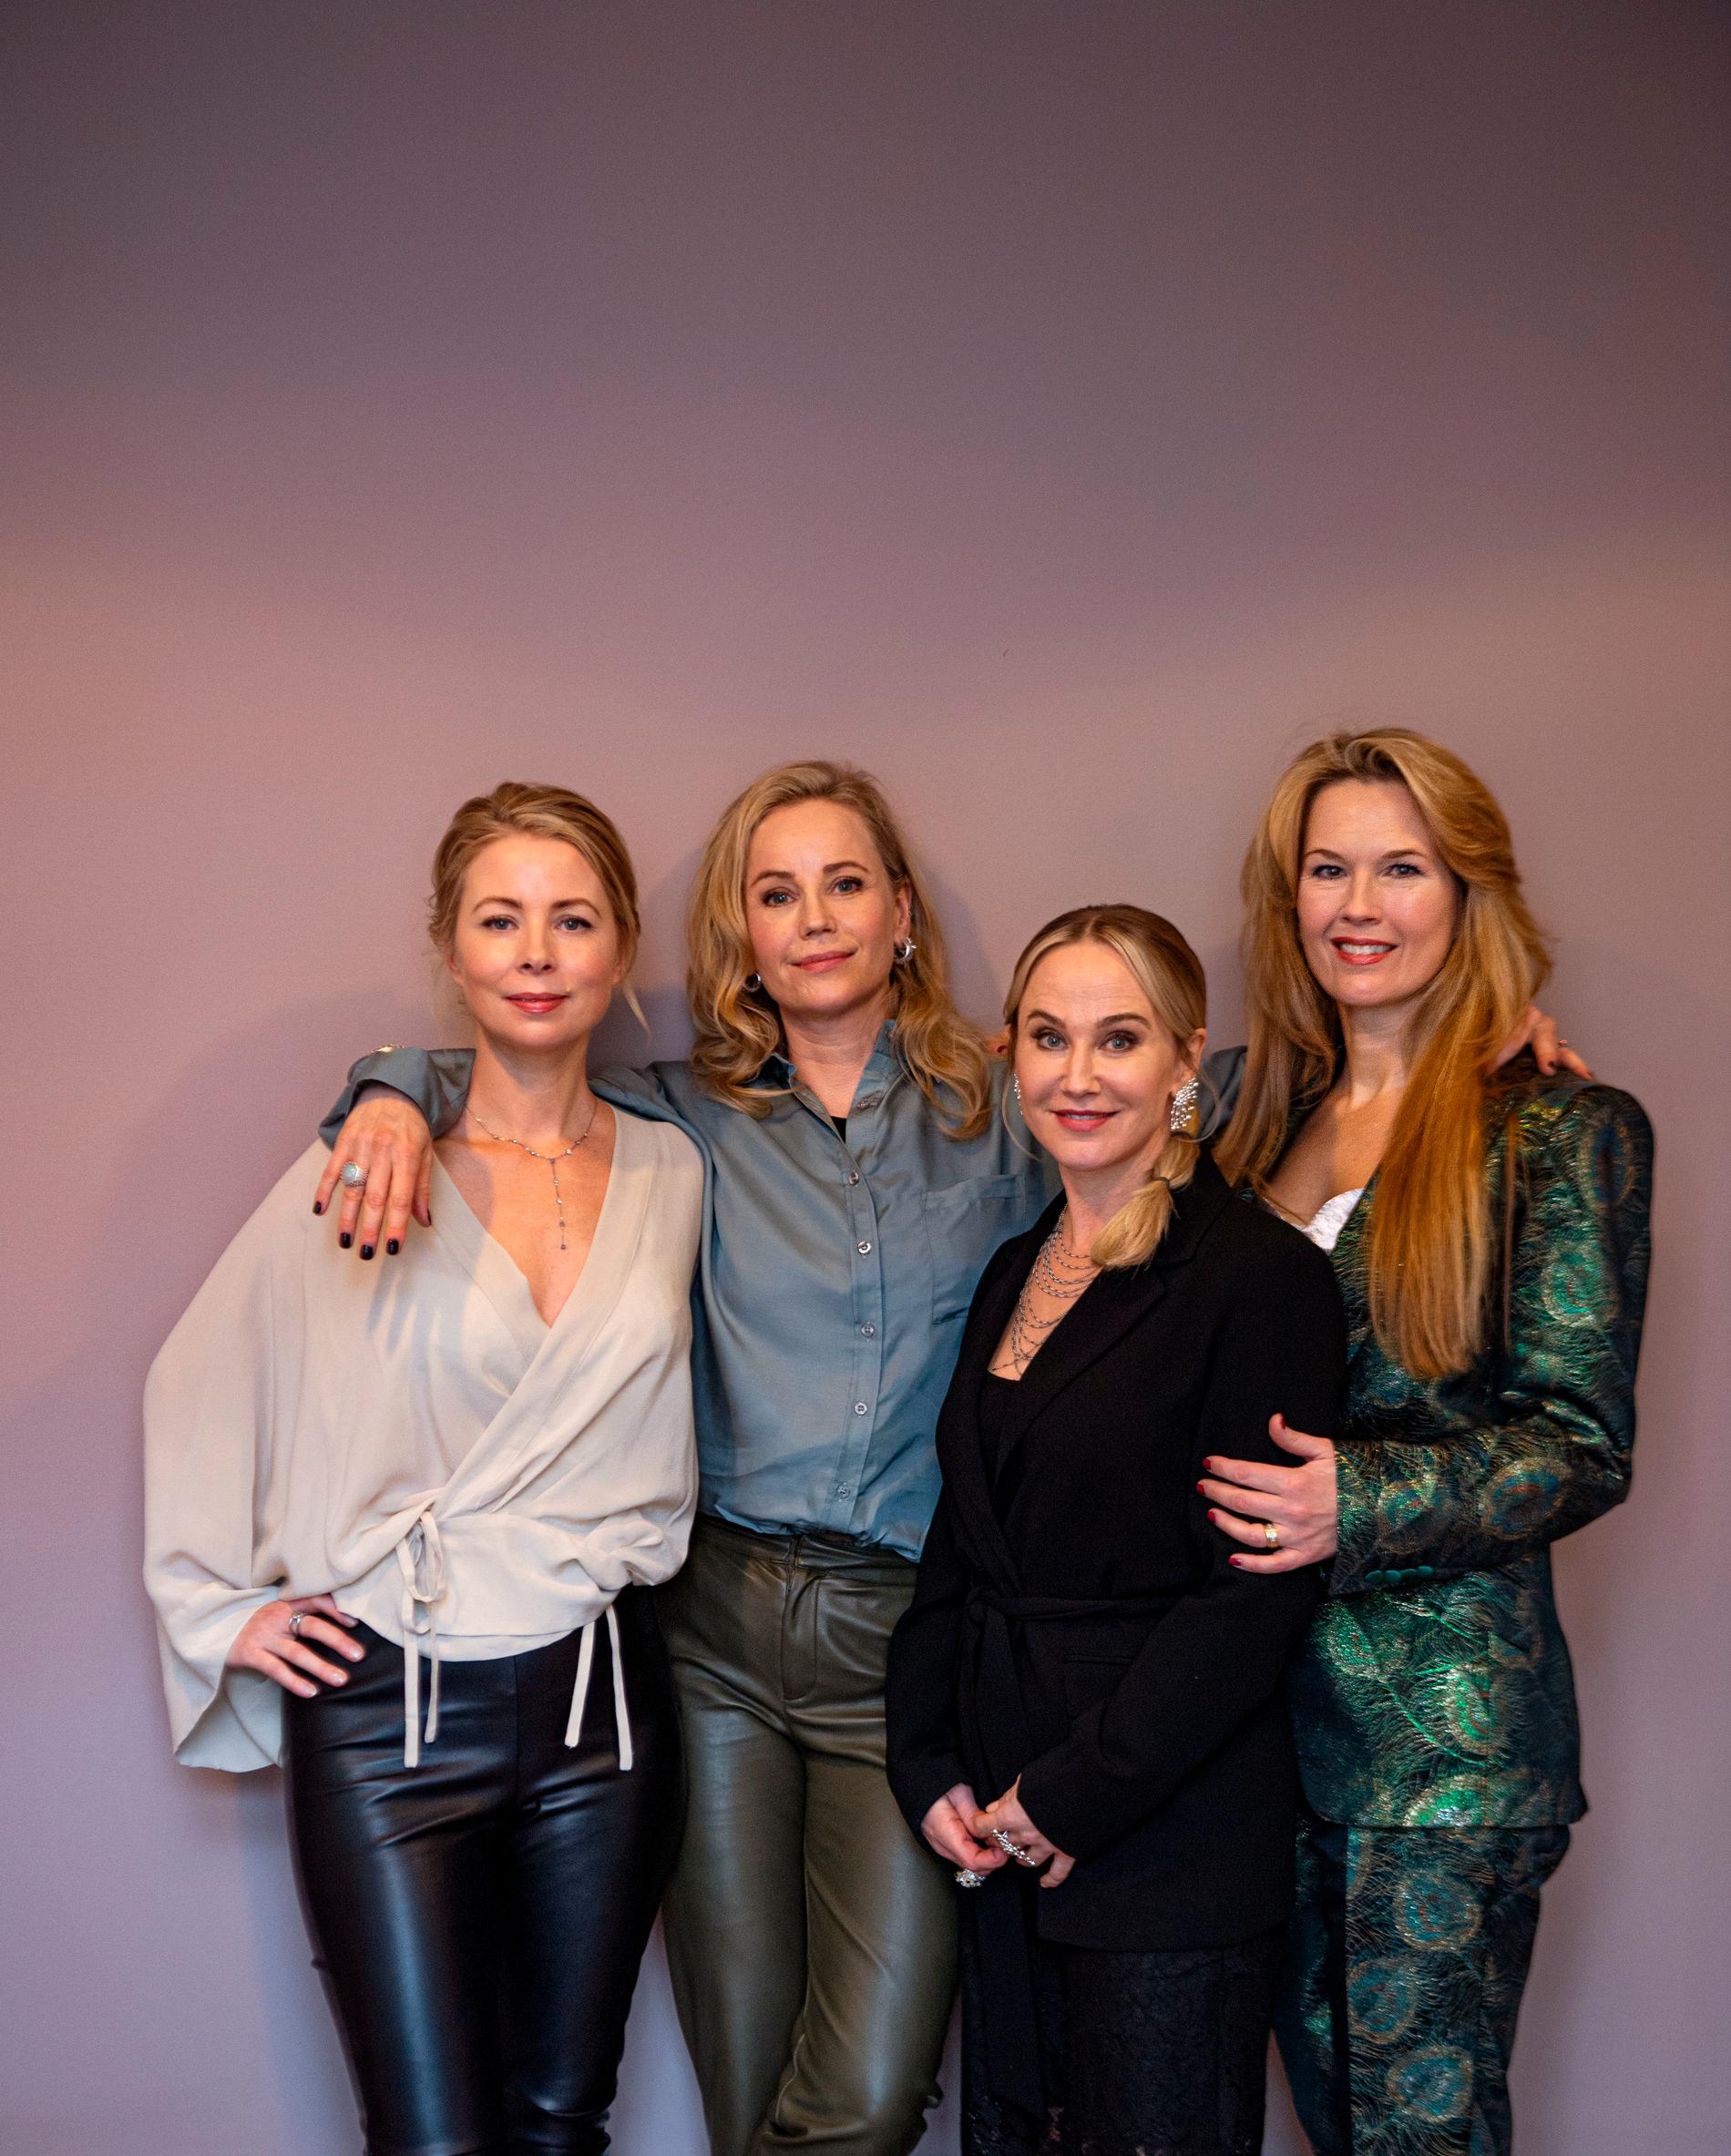  Sofia Helin, Anja Lundqvist, Julia Dufvenius och Elin Klinga spelar i HBO:s nya serie ”Lust”.